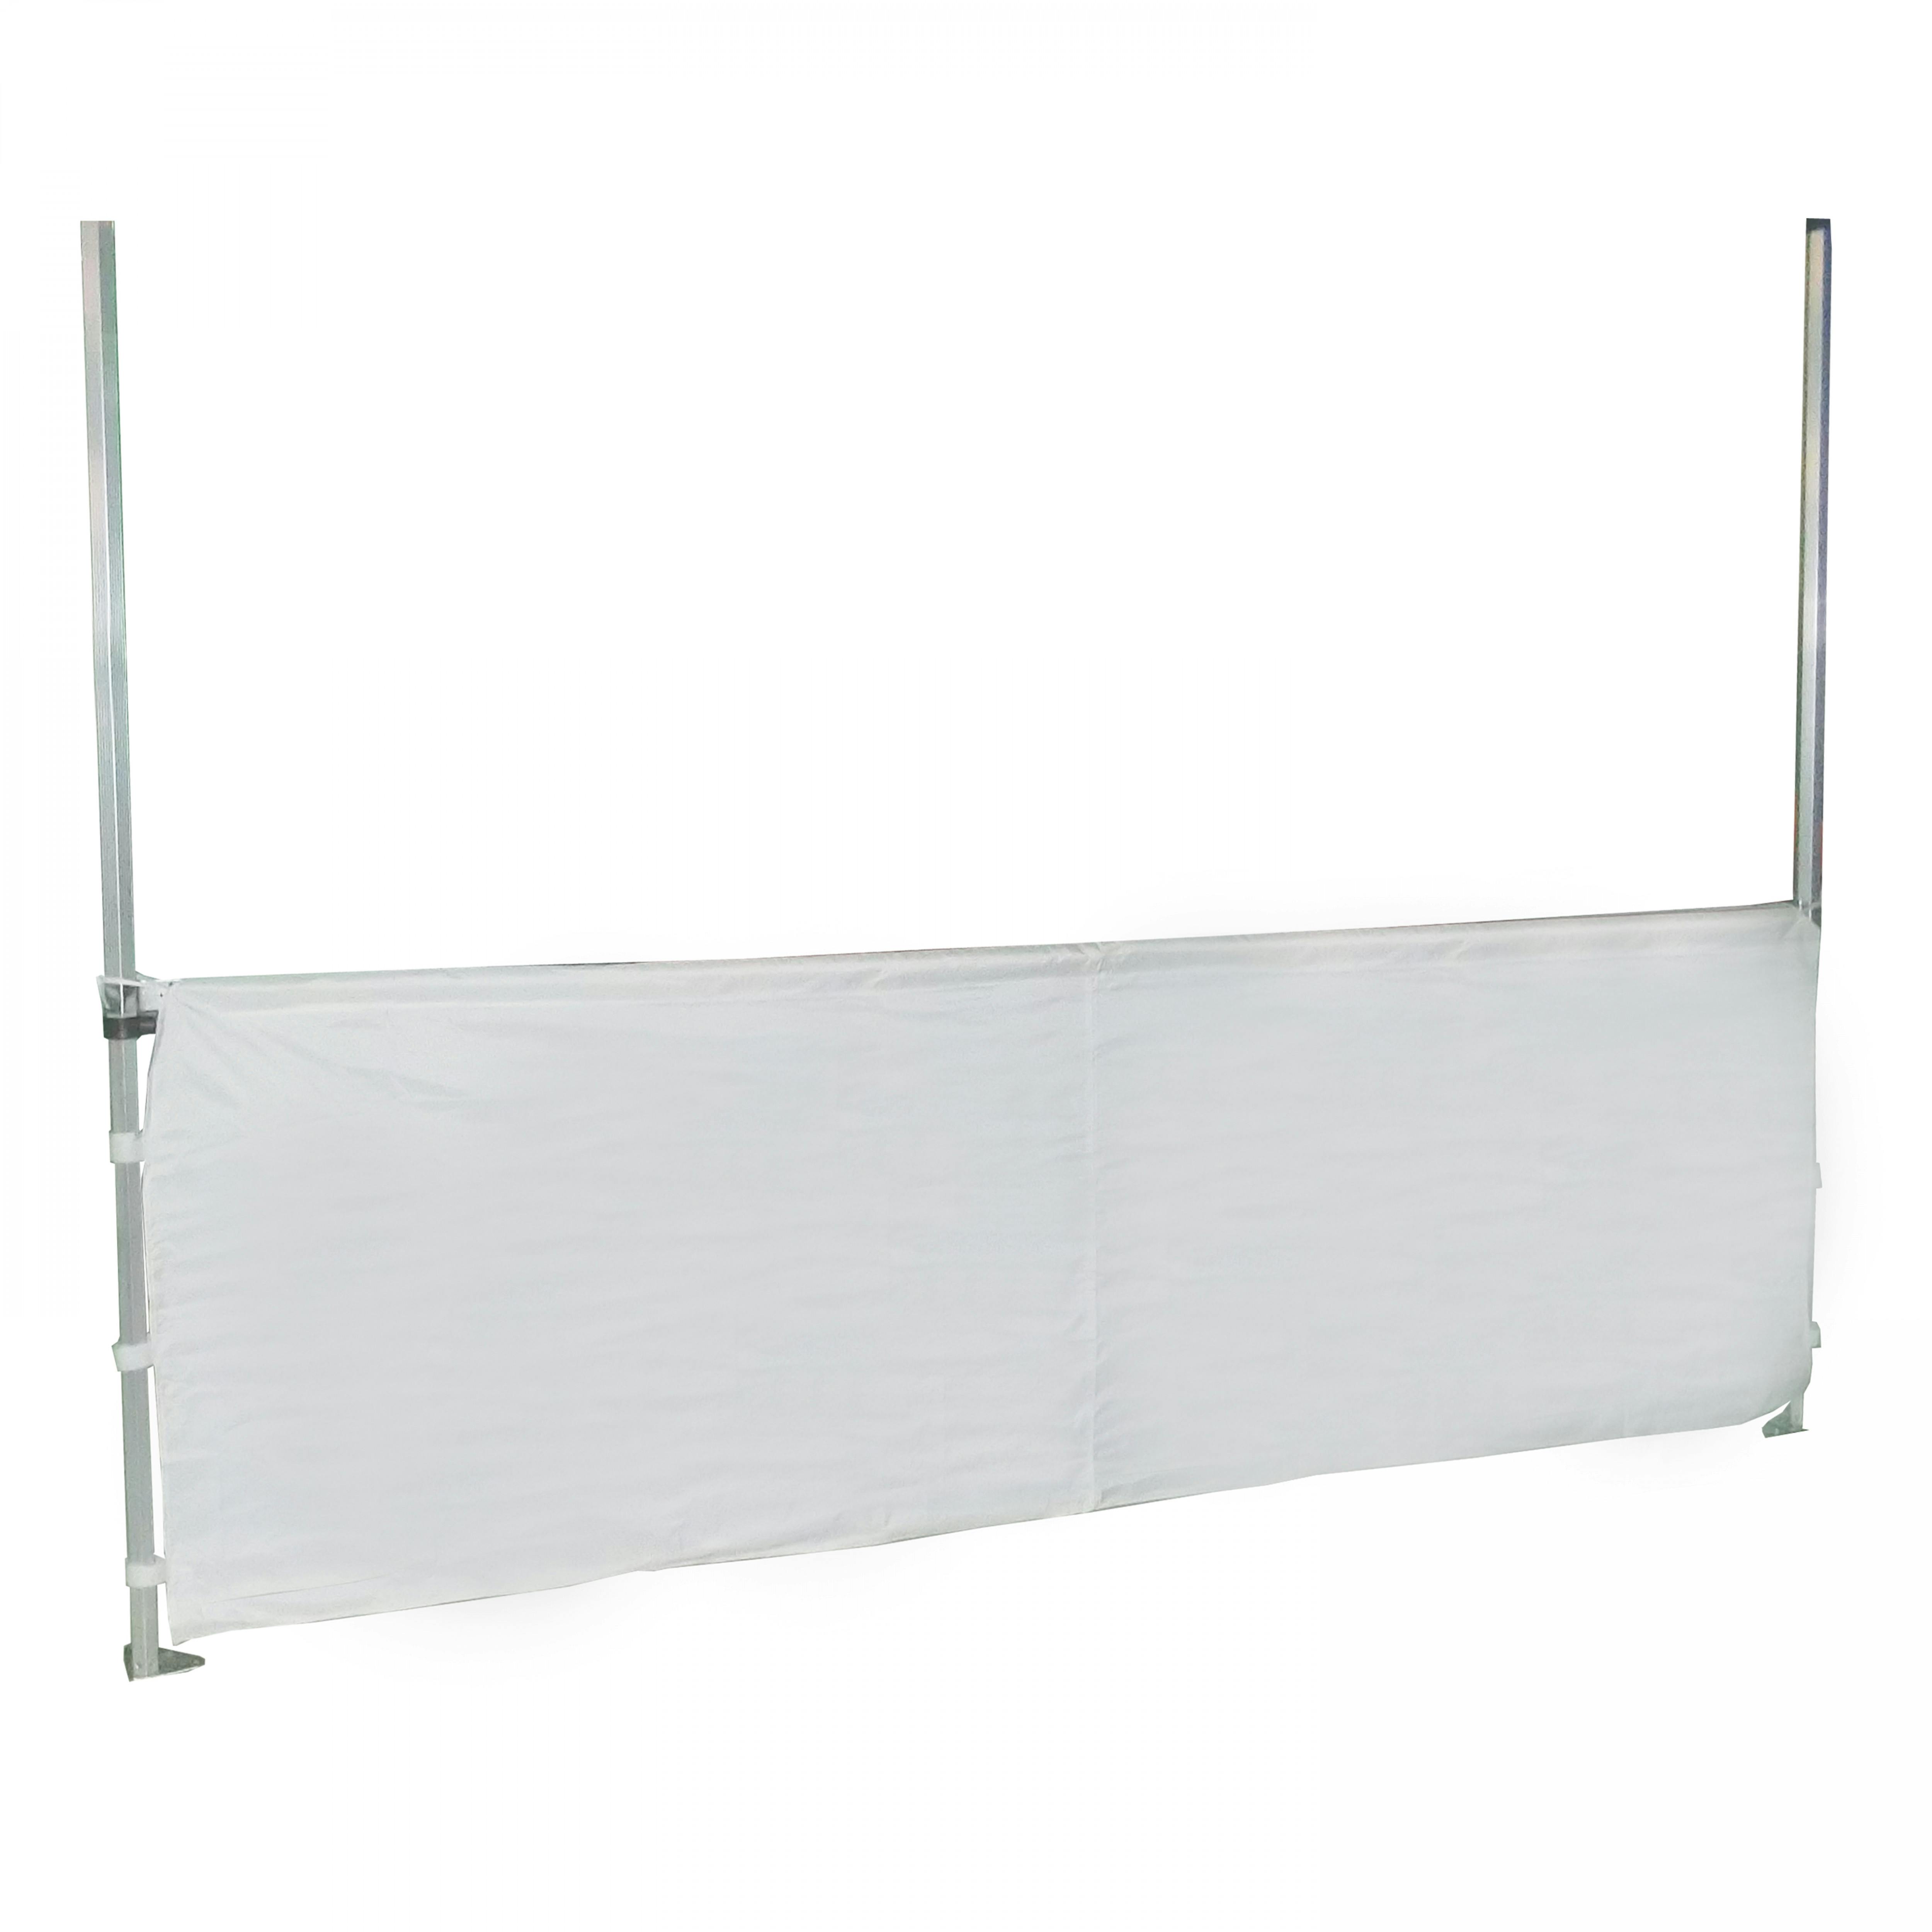 Mur blanc 3 x 2 m avec porte zippable pour tente pliante